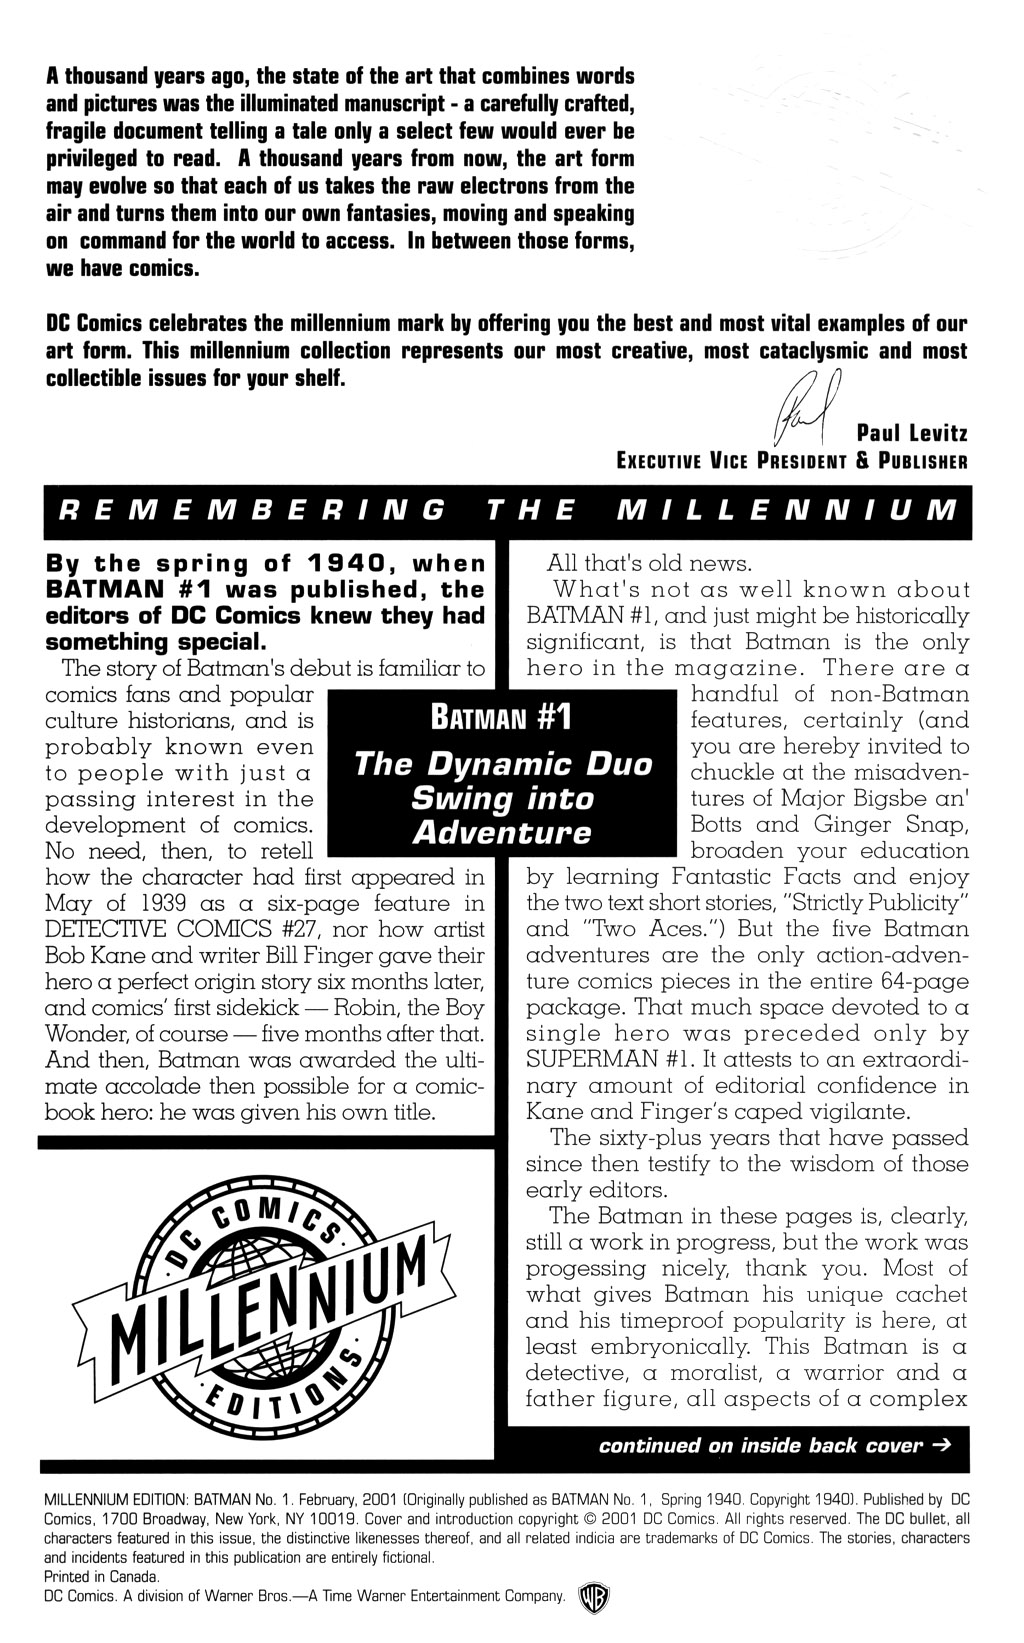 Read online Millennium Edition: Batman 1 comic -  Issue # Full - 2